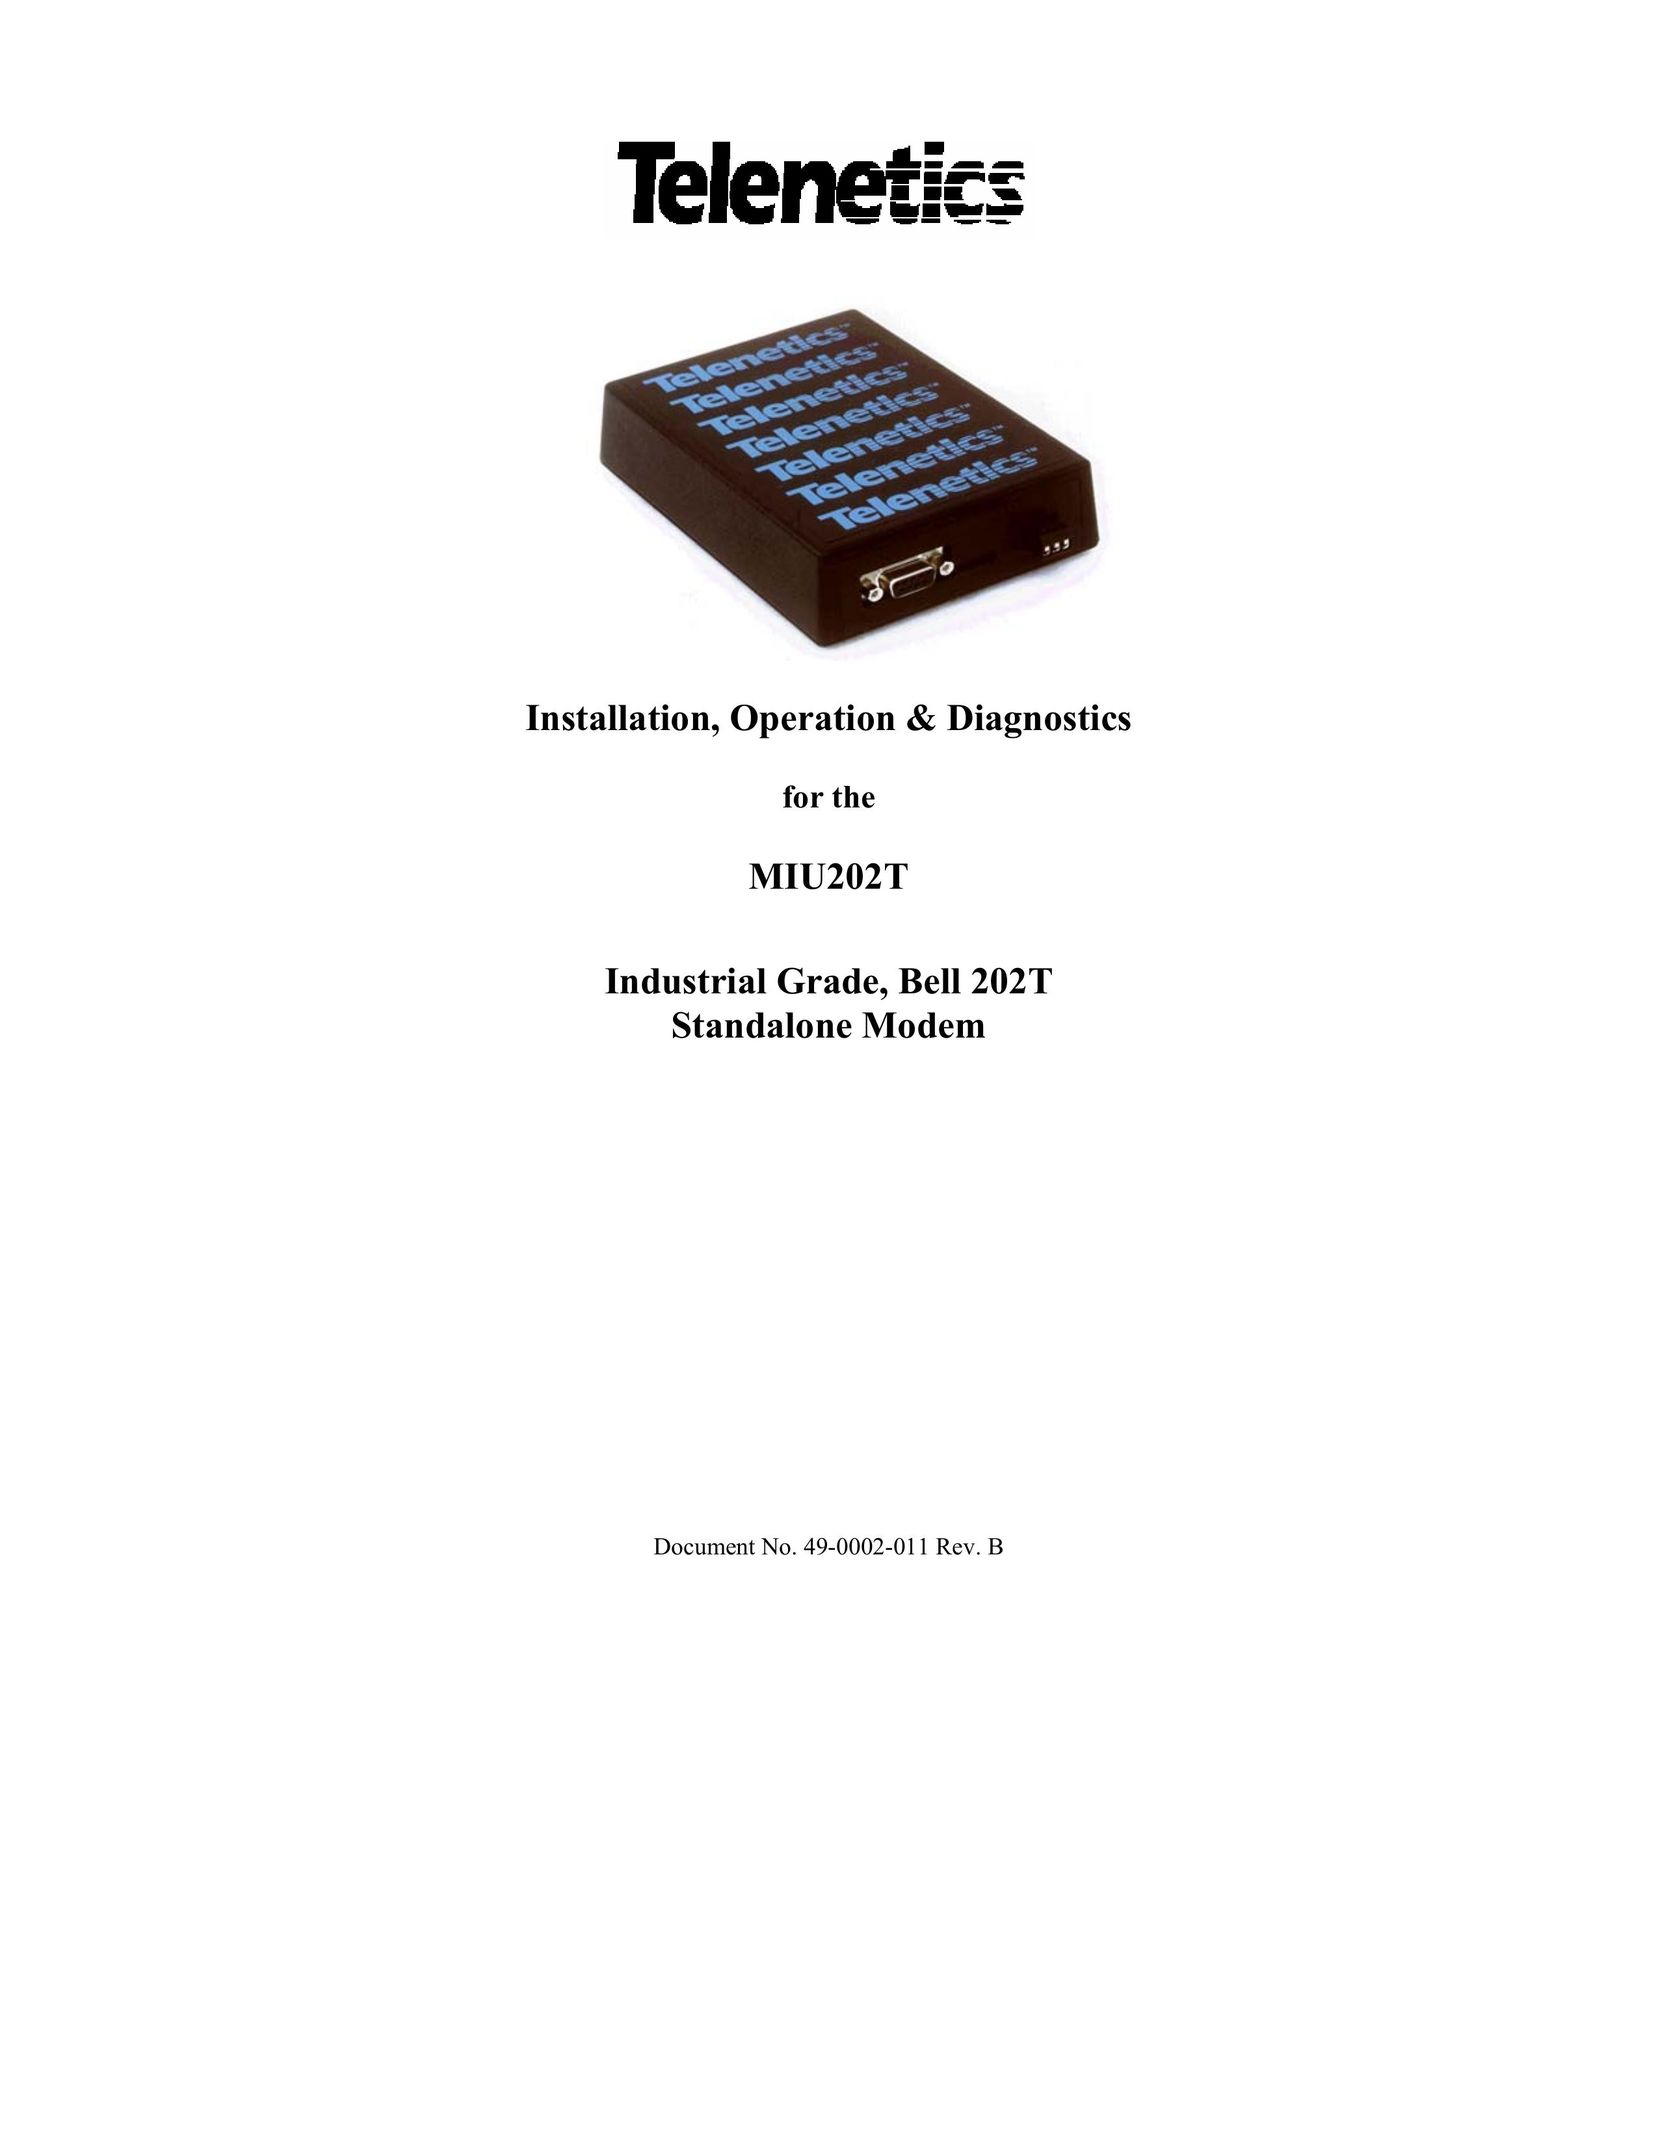 Telenetics MIU202T Modem Network Card User Manual